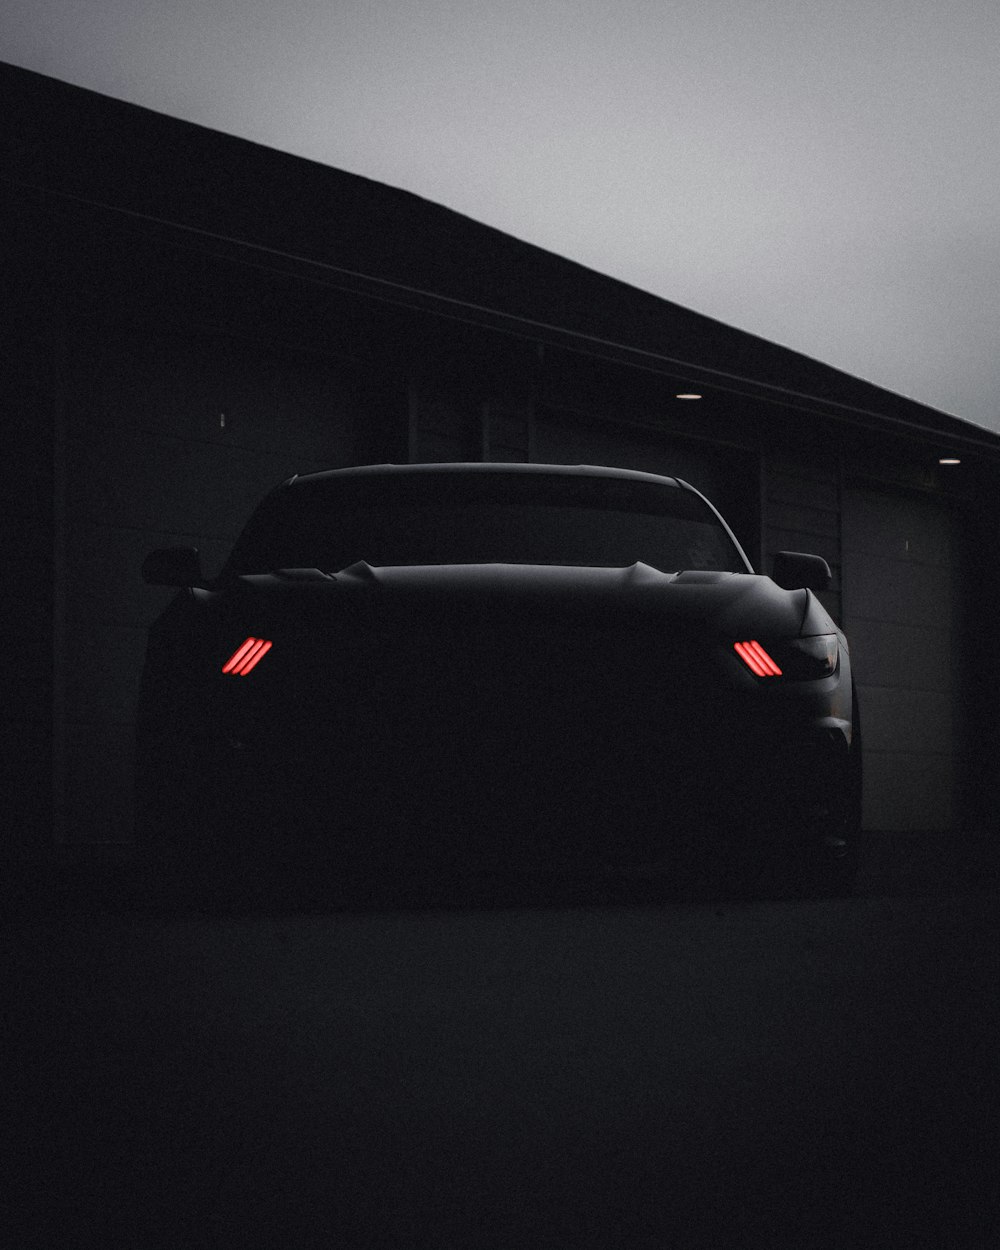 black car in a dark room